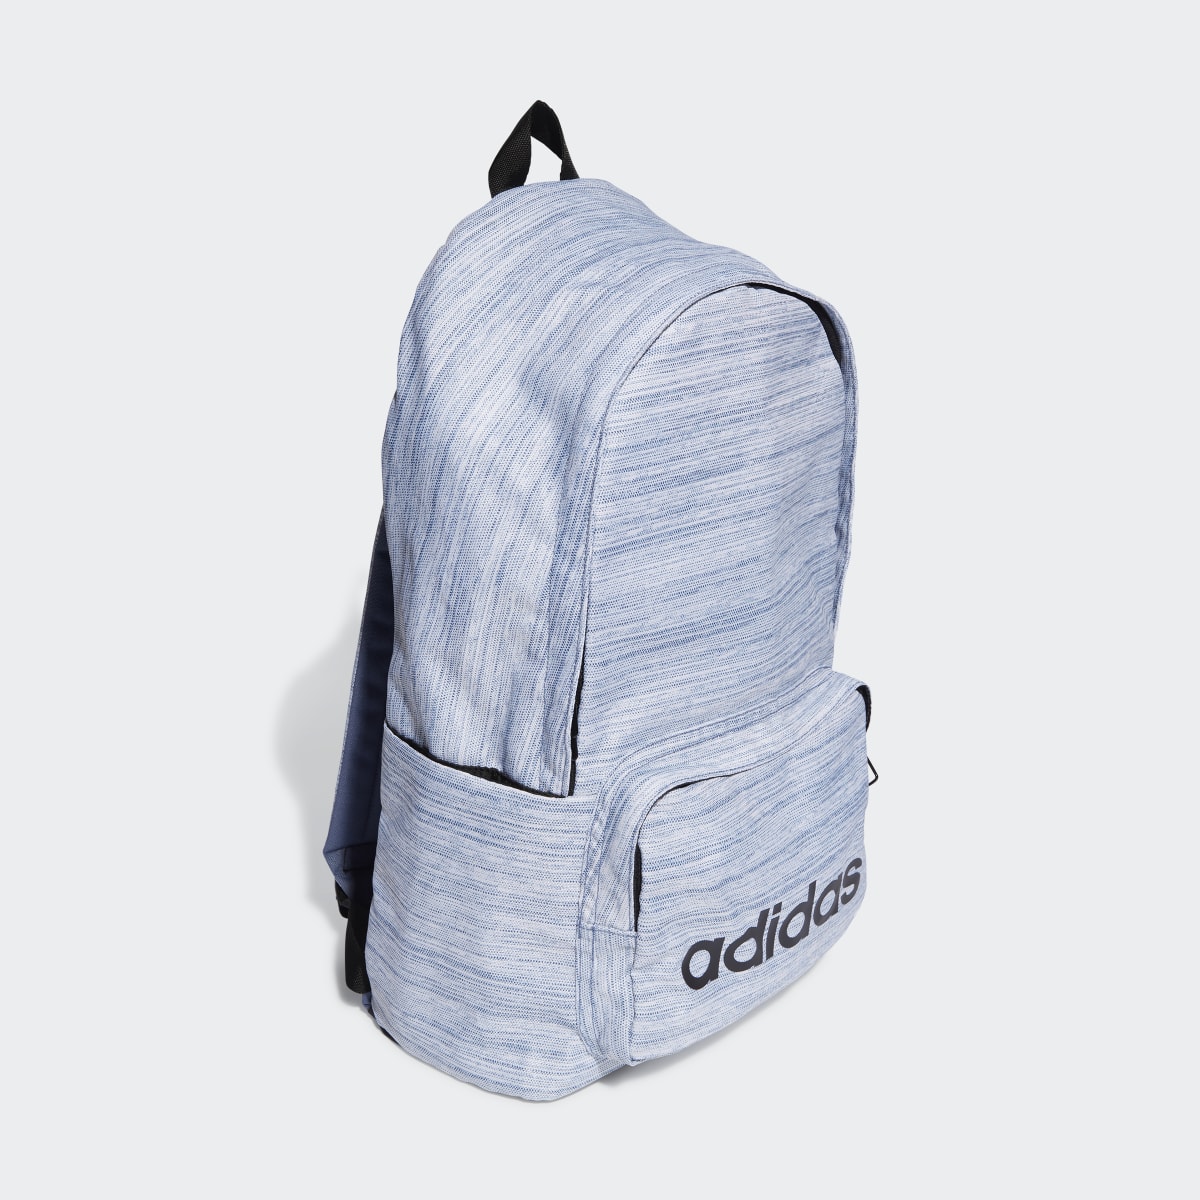 Adidas Classic Attitude Backpack. 4